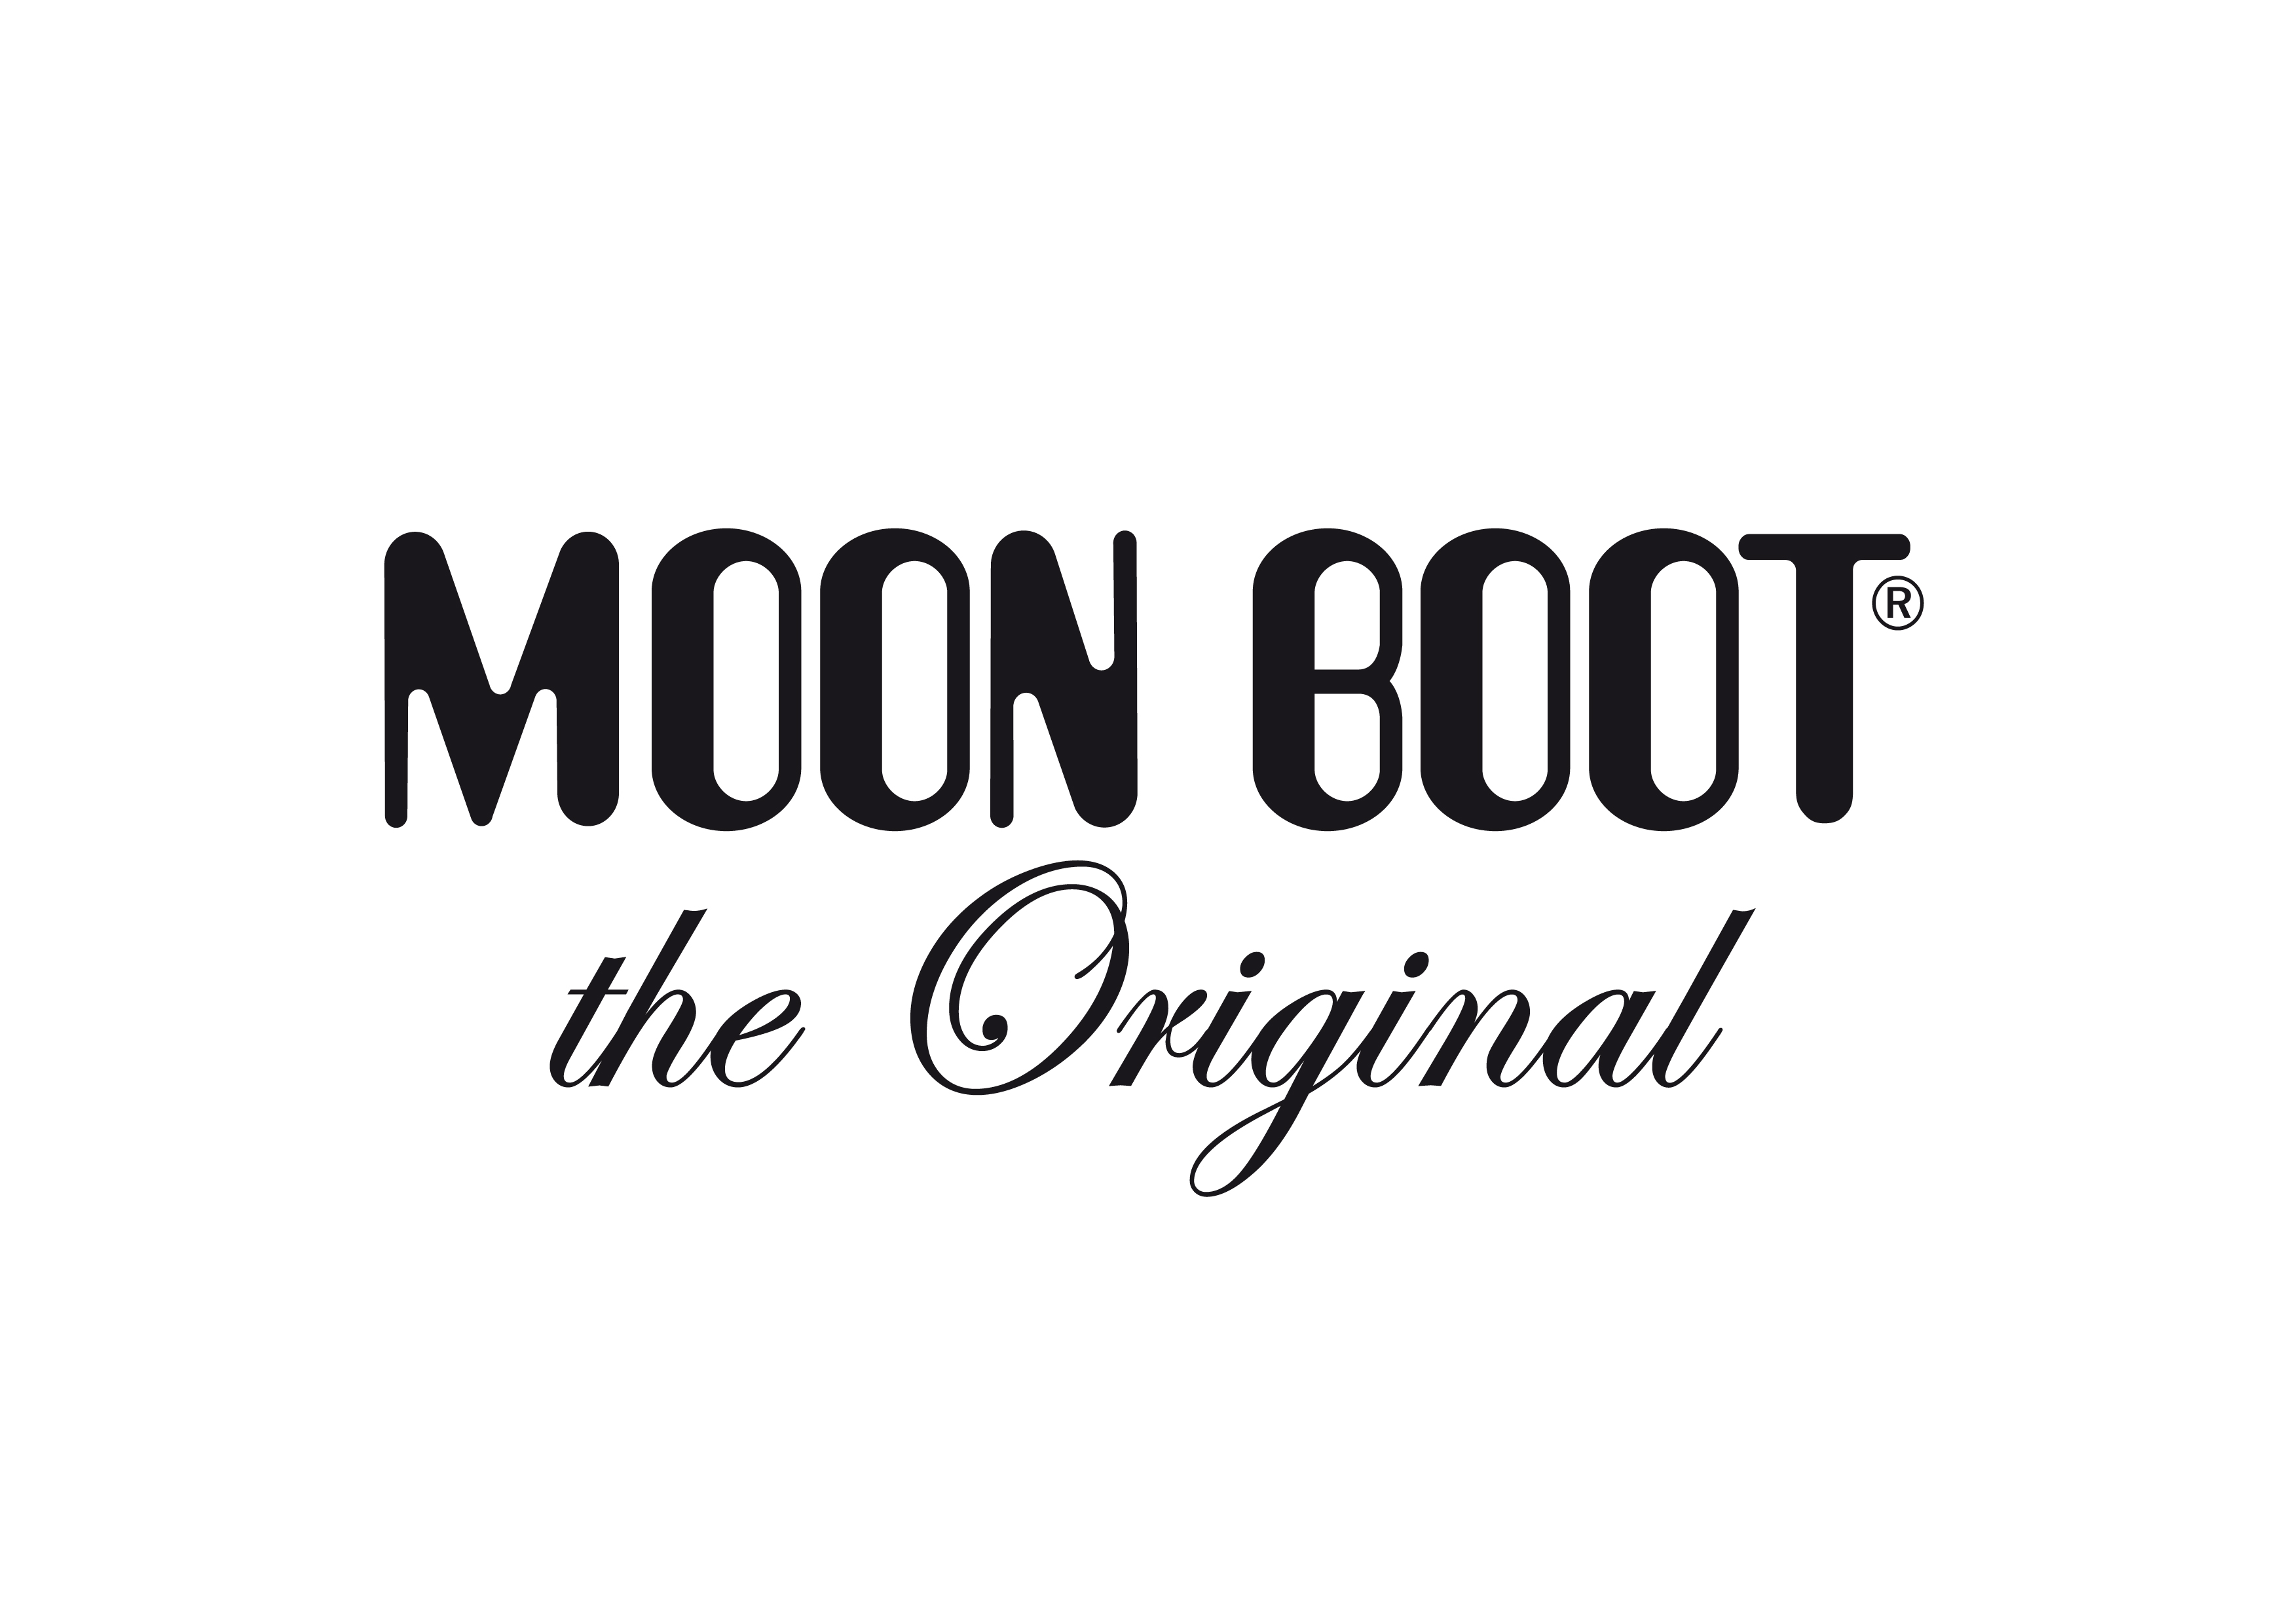 Moon Boots